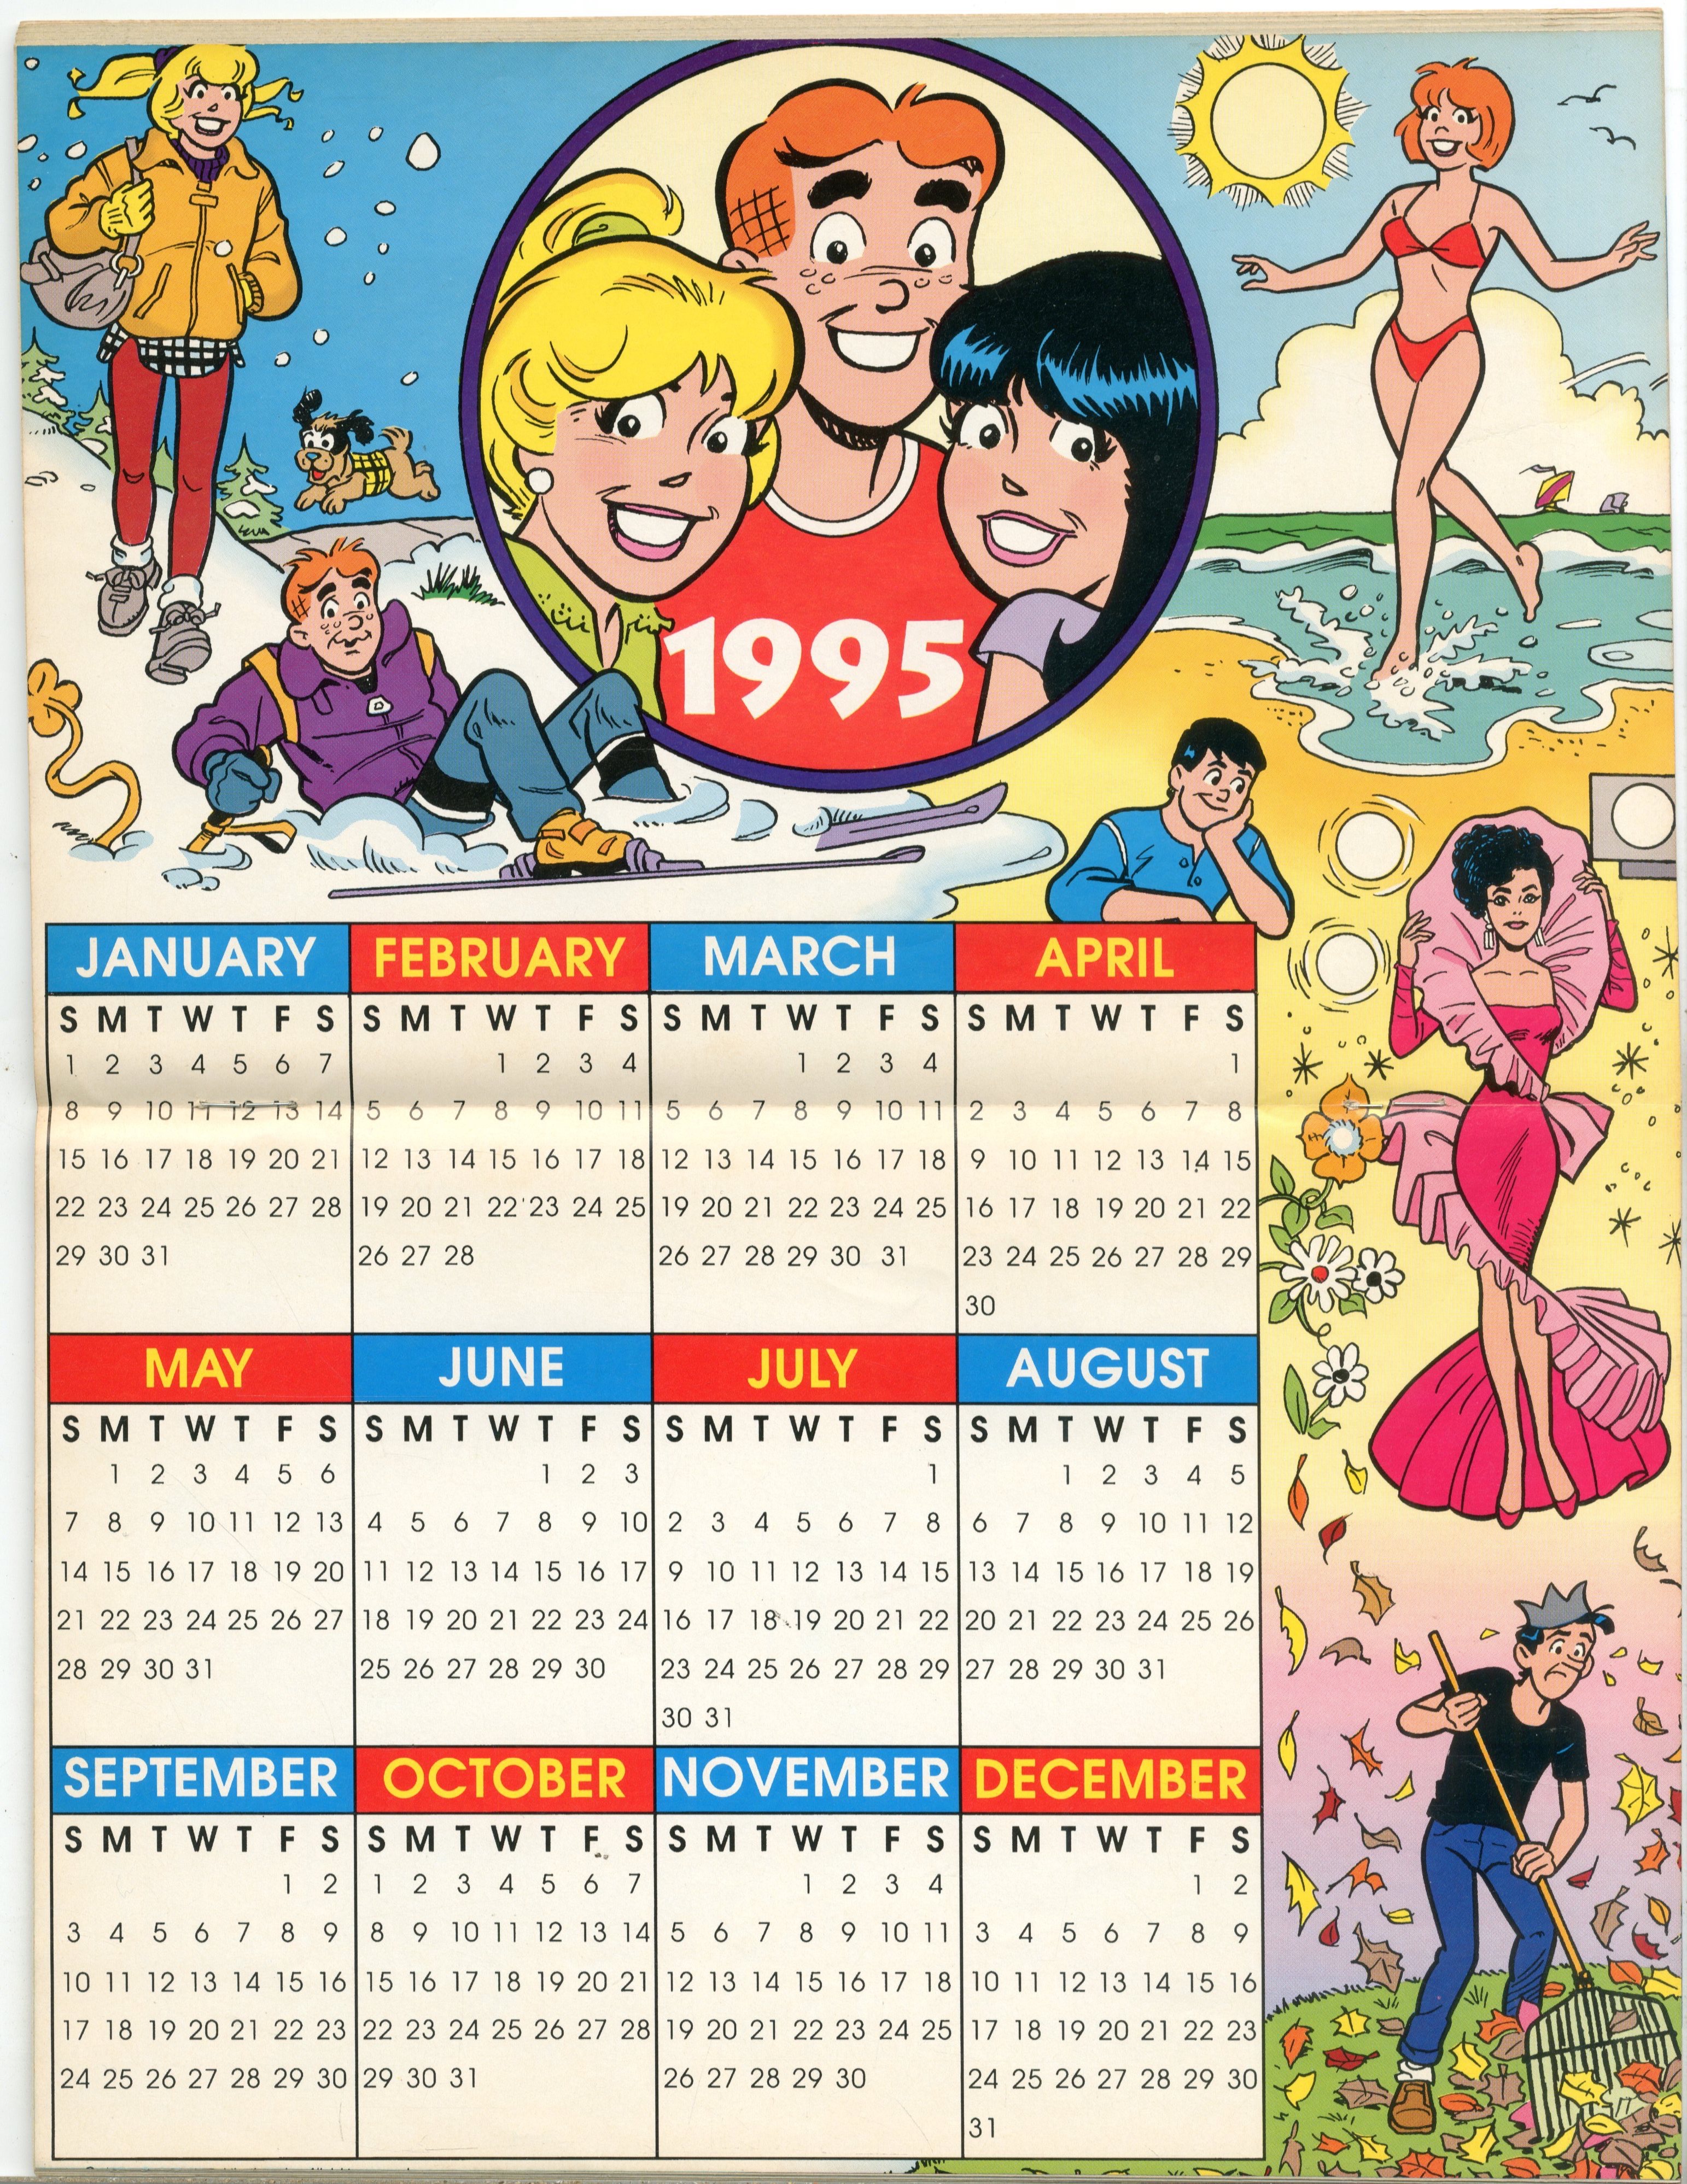 Archie Comics Mixed Bag Of Modern Titles - 17646